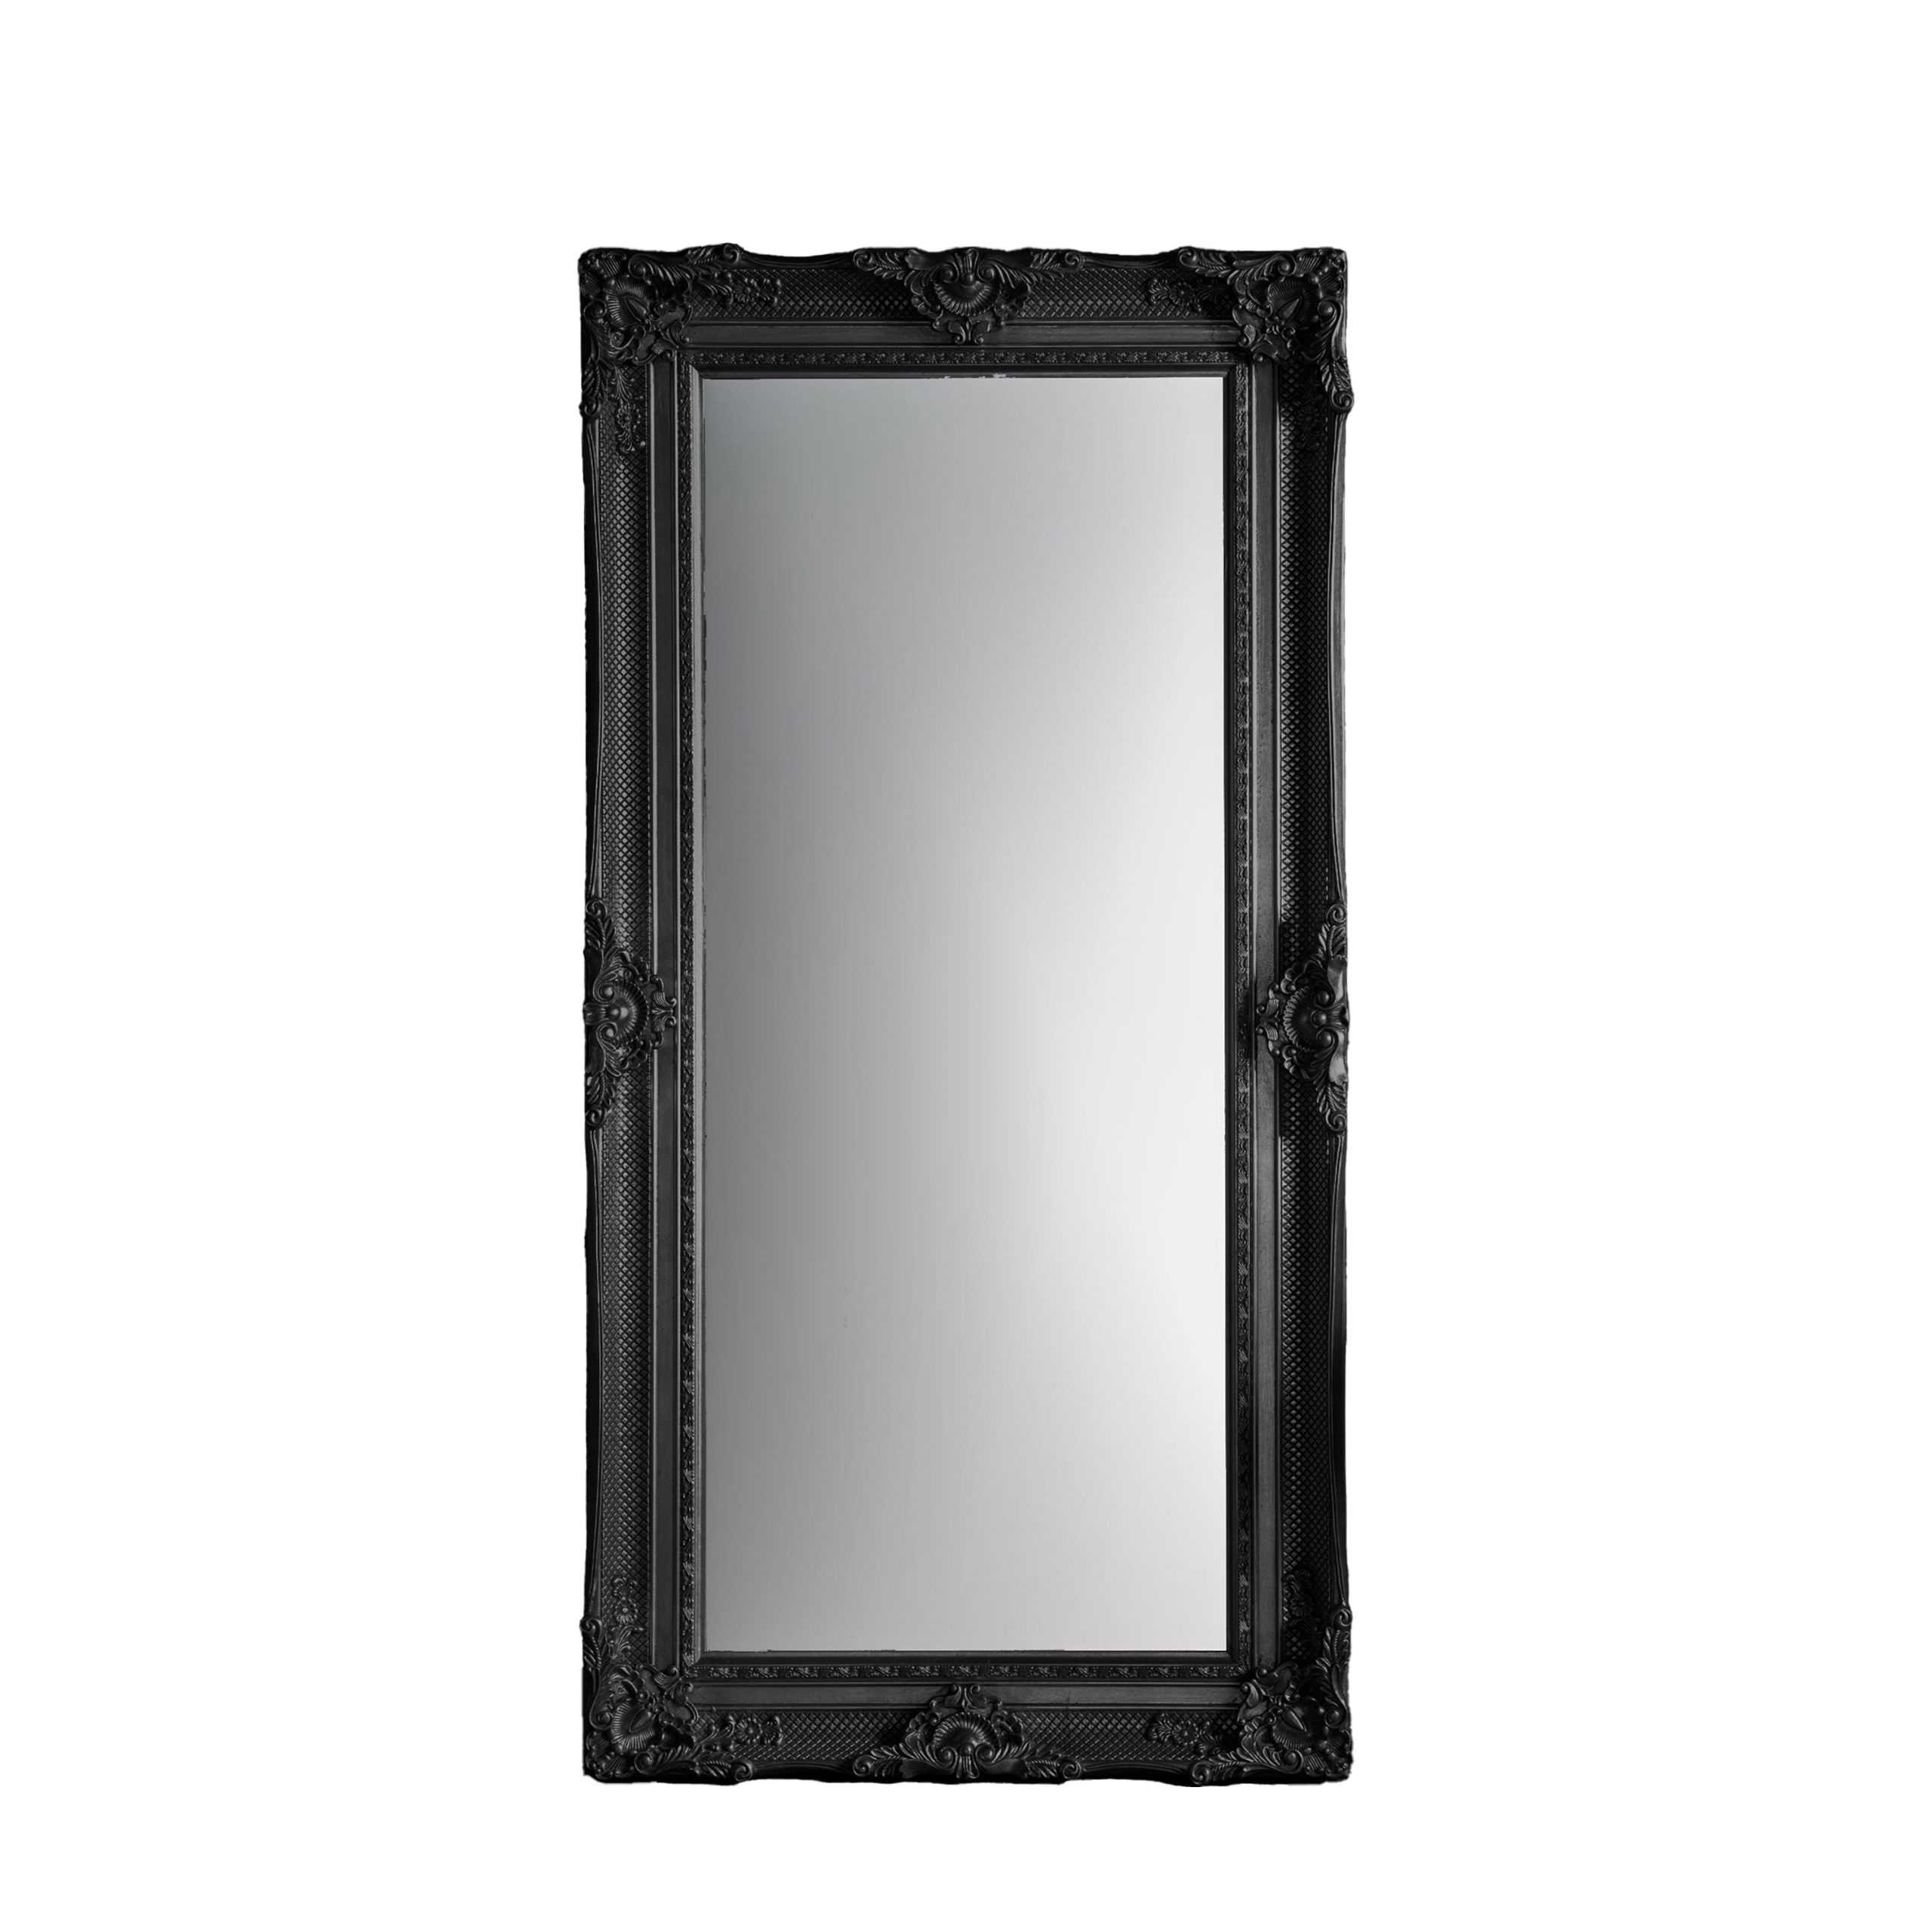 Gallery Direct Valois Leaner Mirror Black